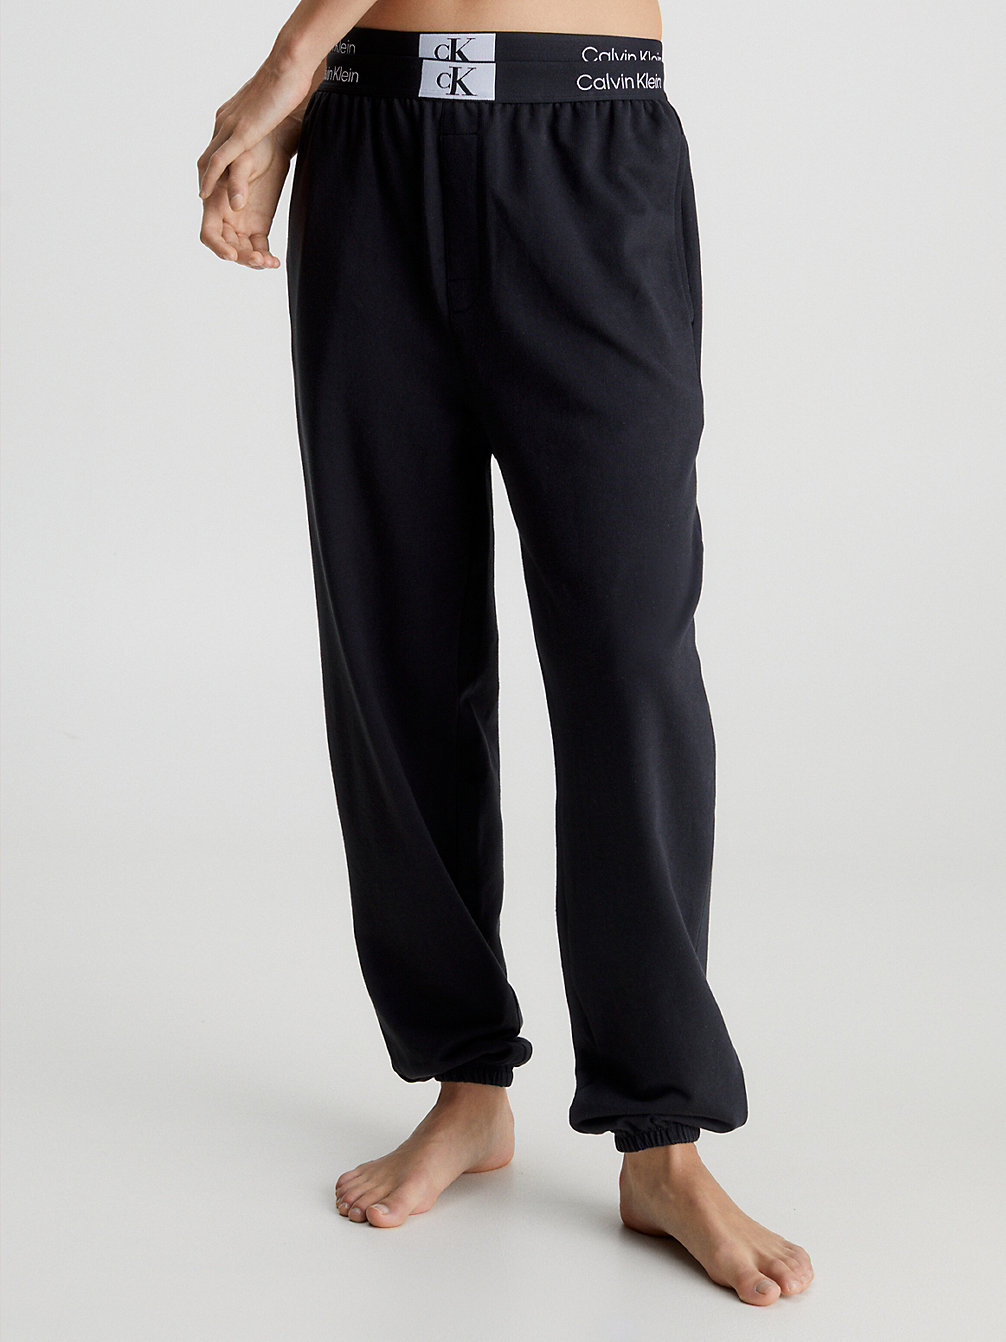 BLACK > Spodnie Dresowe Po Domu - Ck96 > undefined Kobiety - Calvin Klein